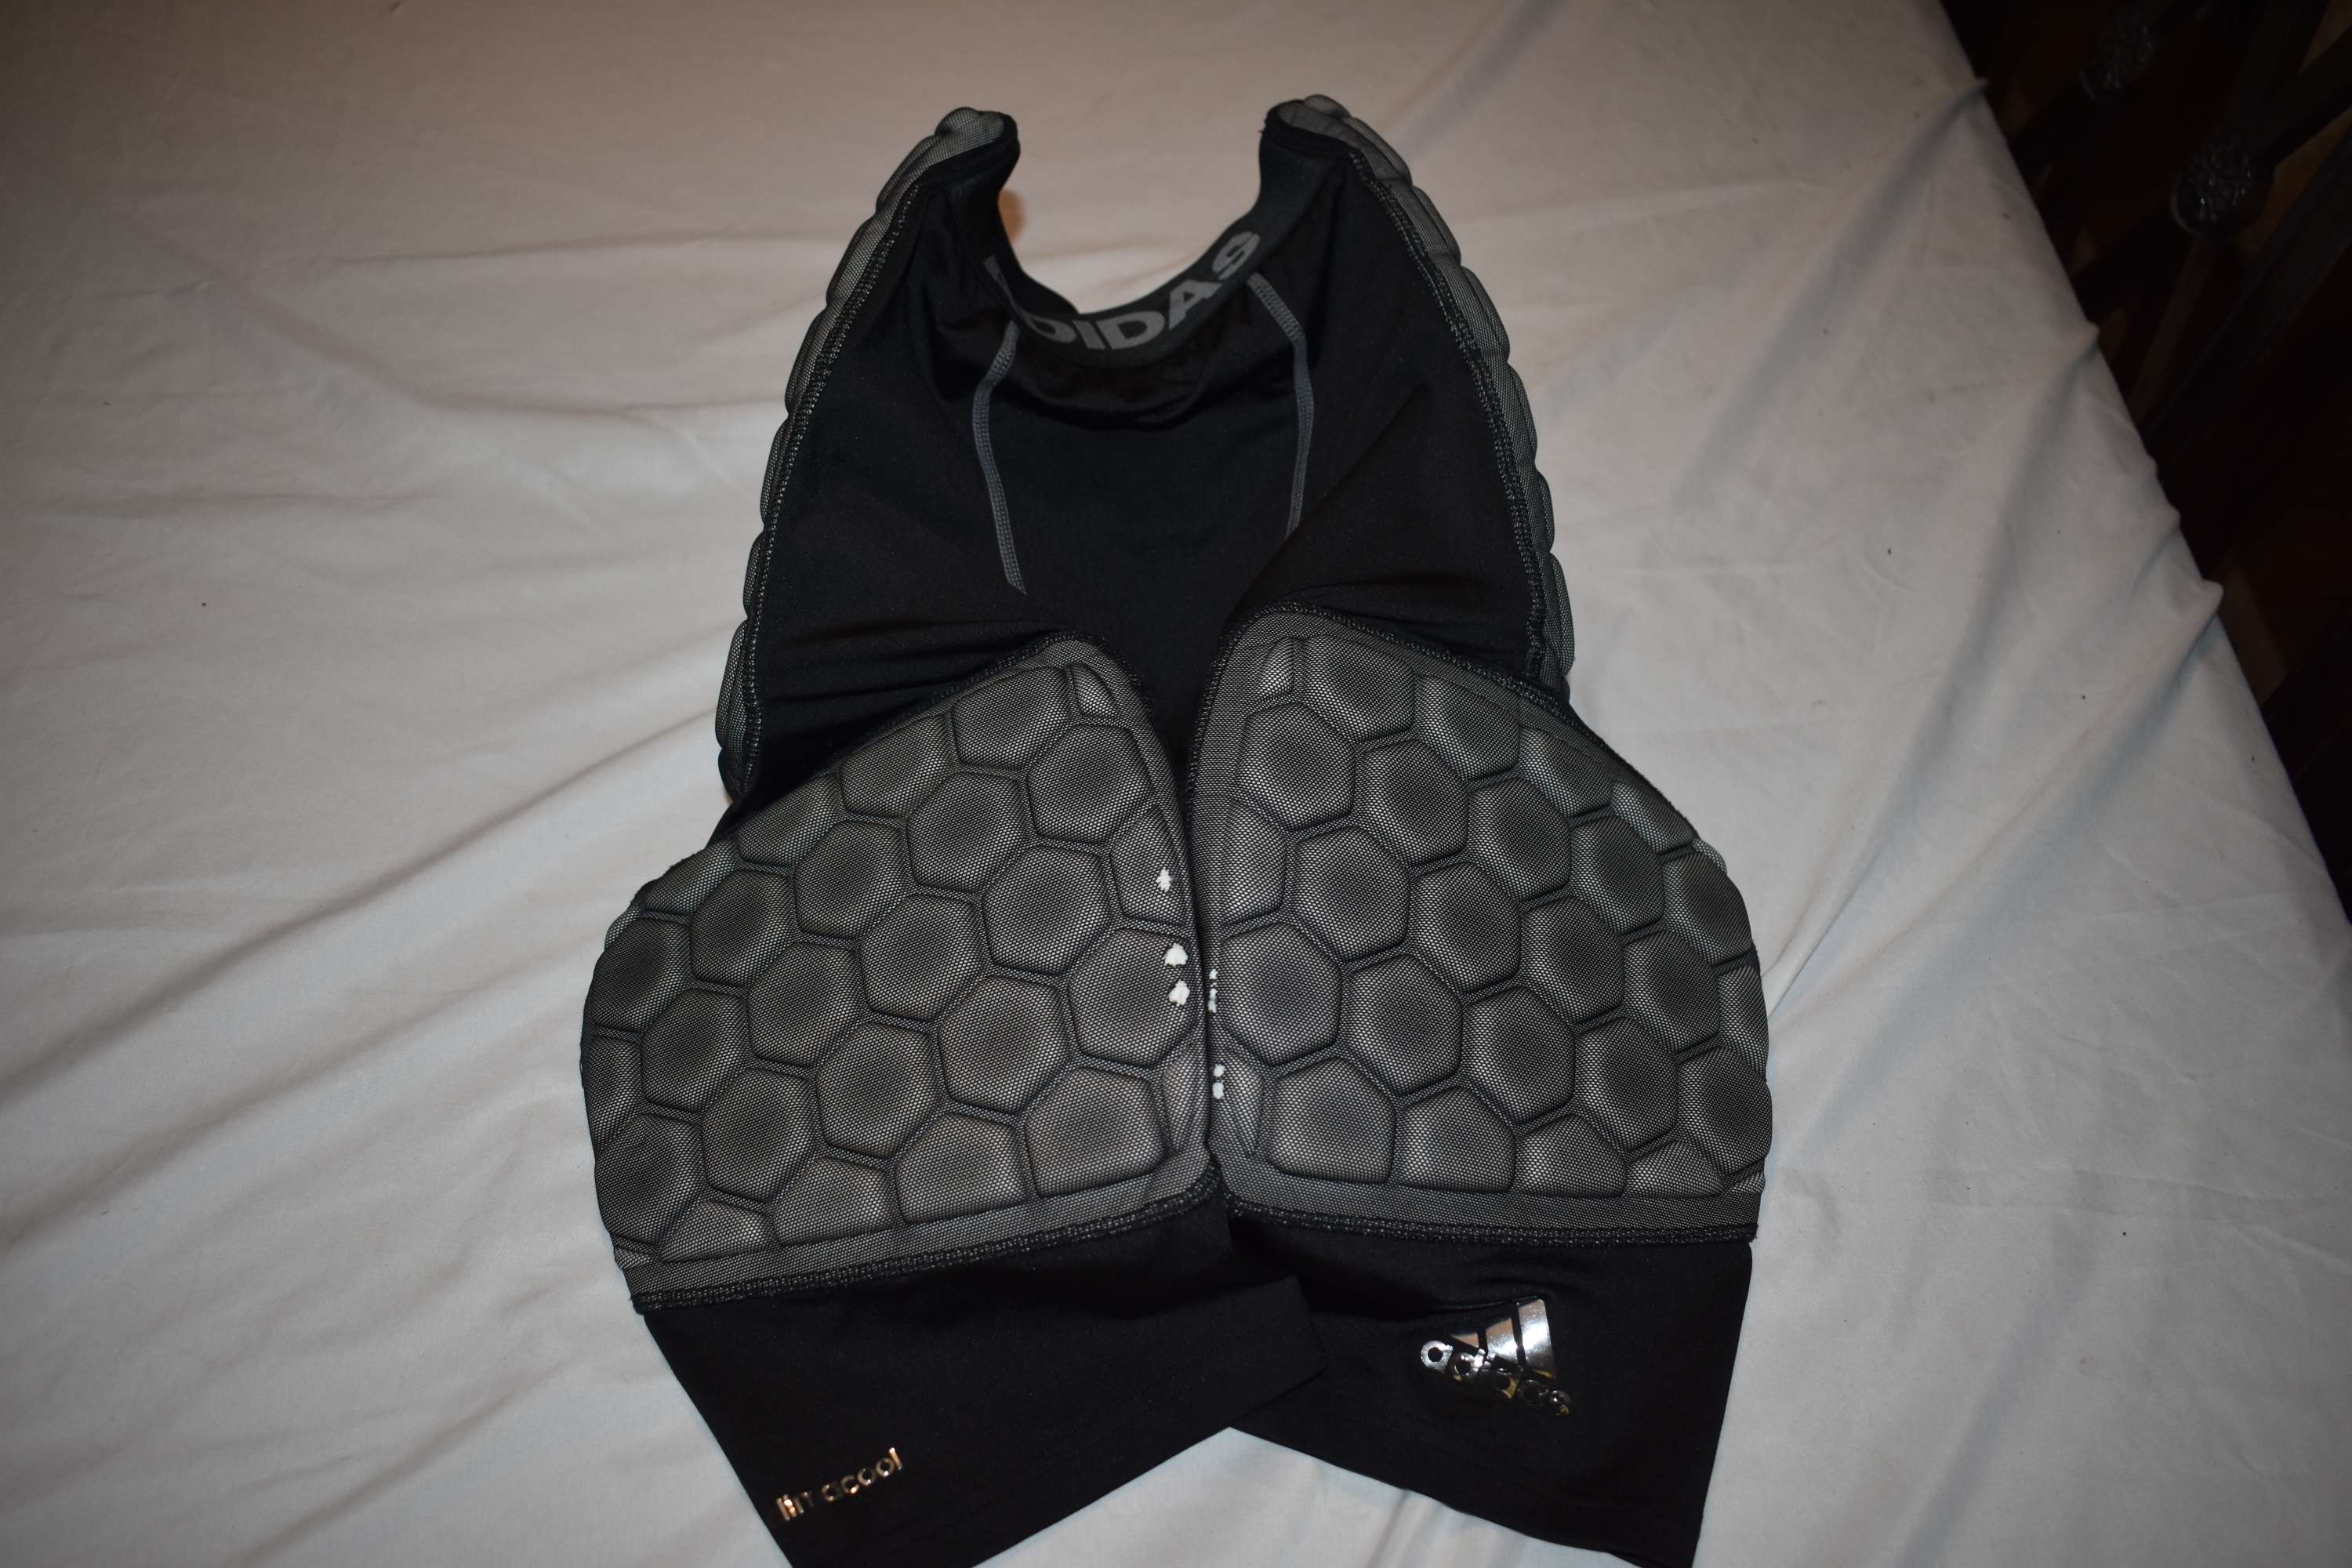 Adidas Climacool Padded Protective Girdle, Black, Medium